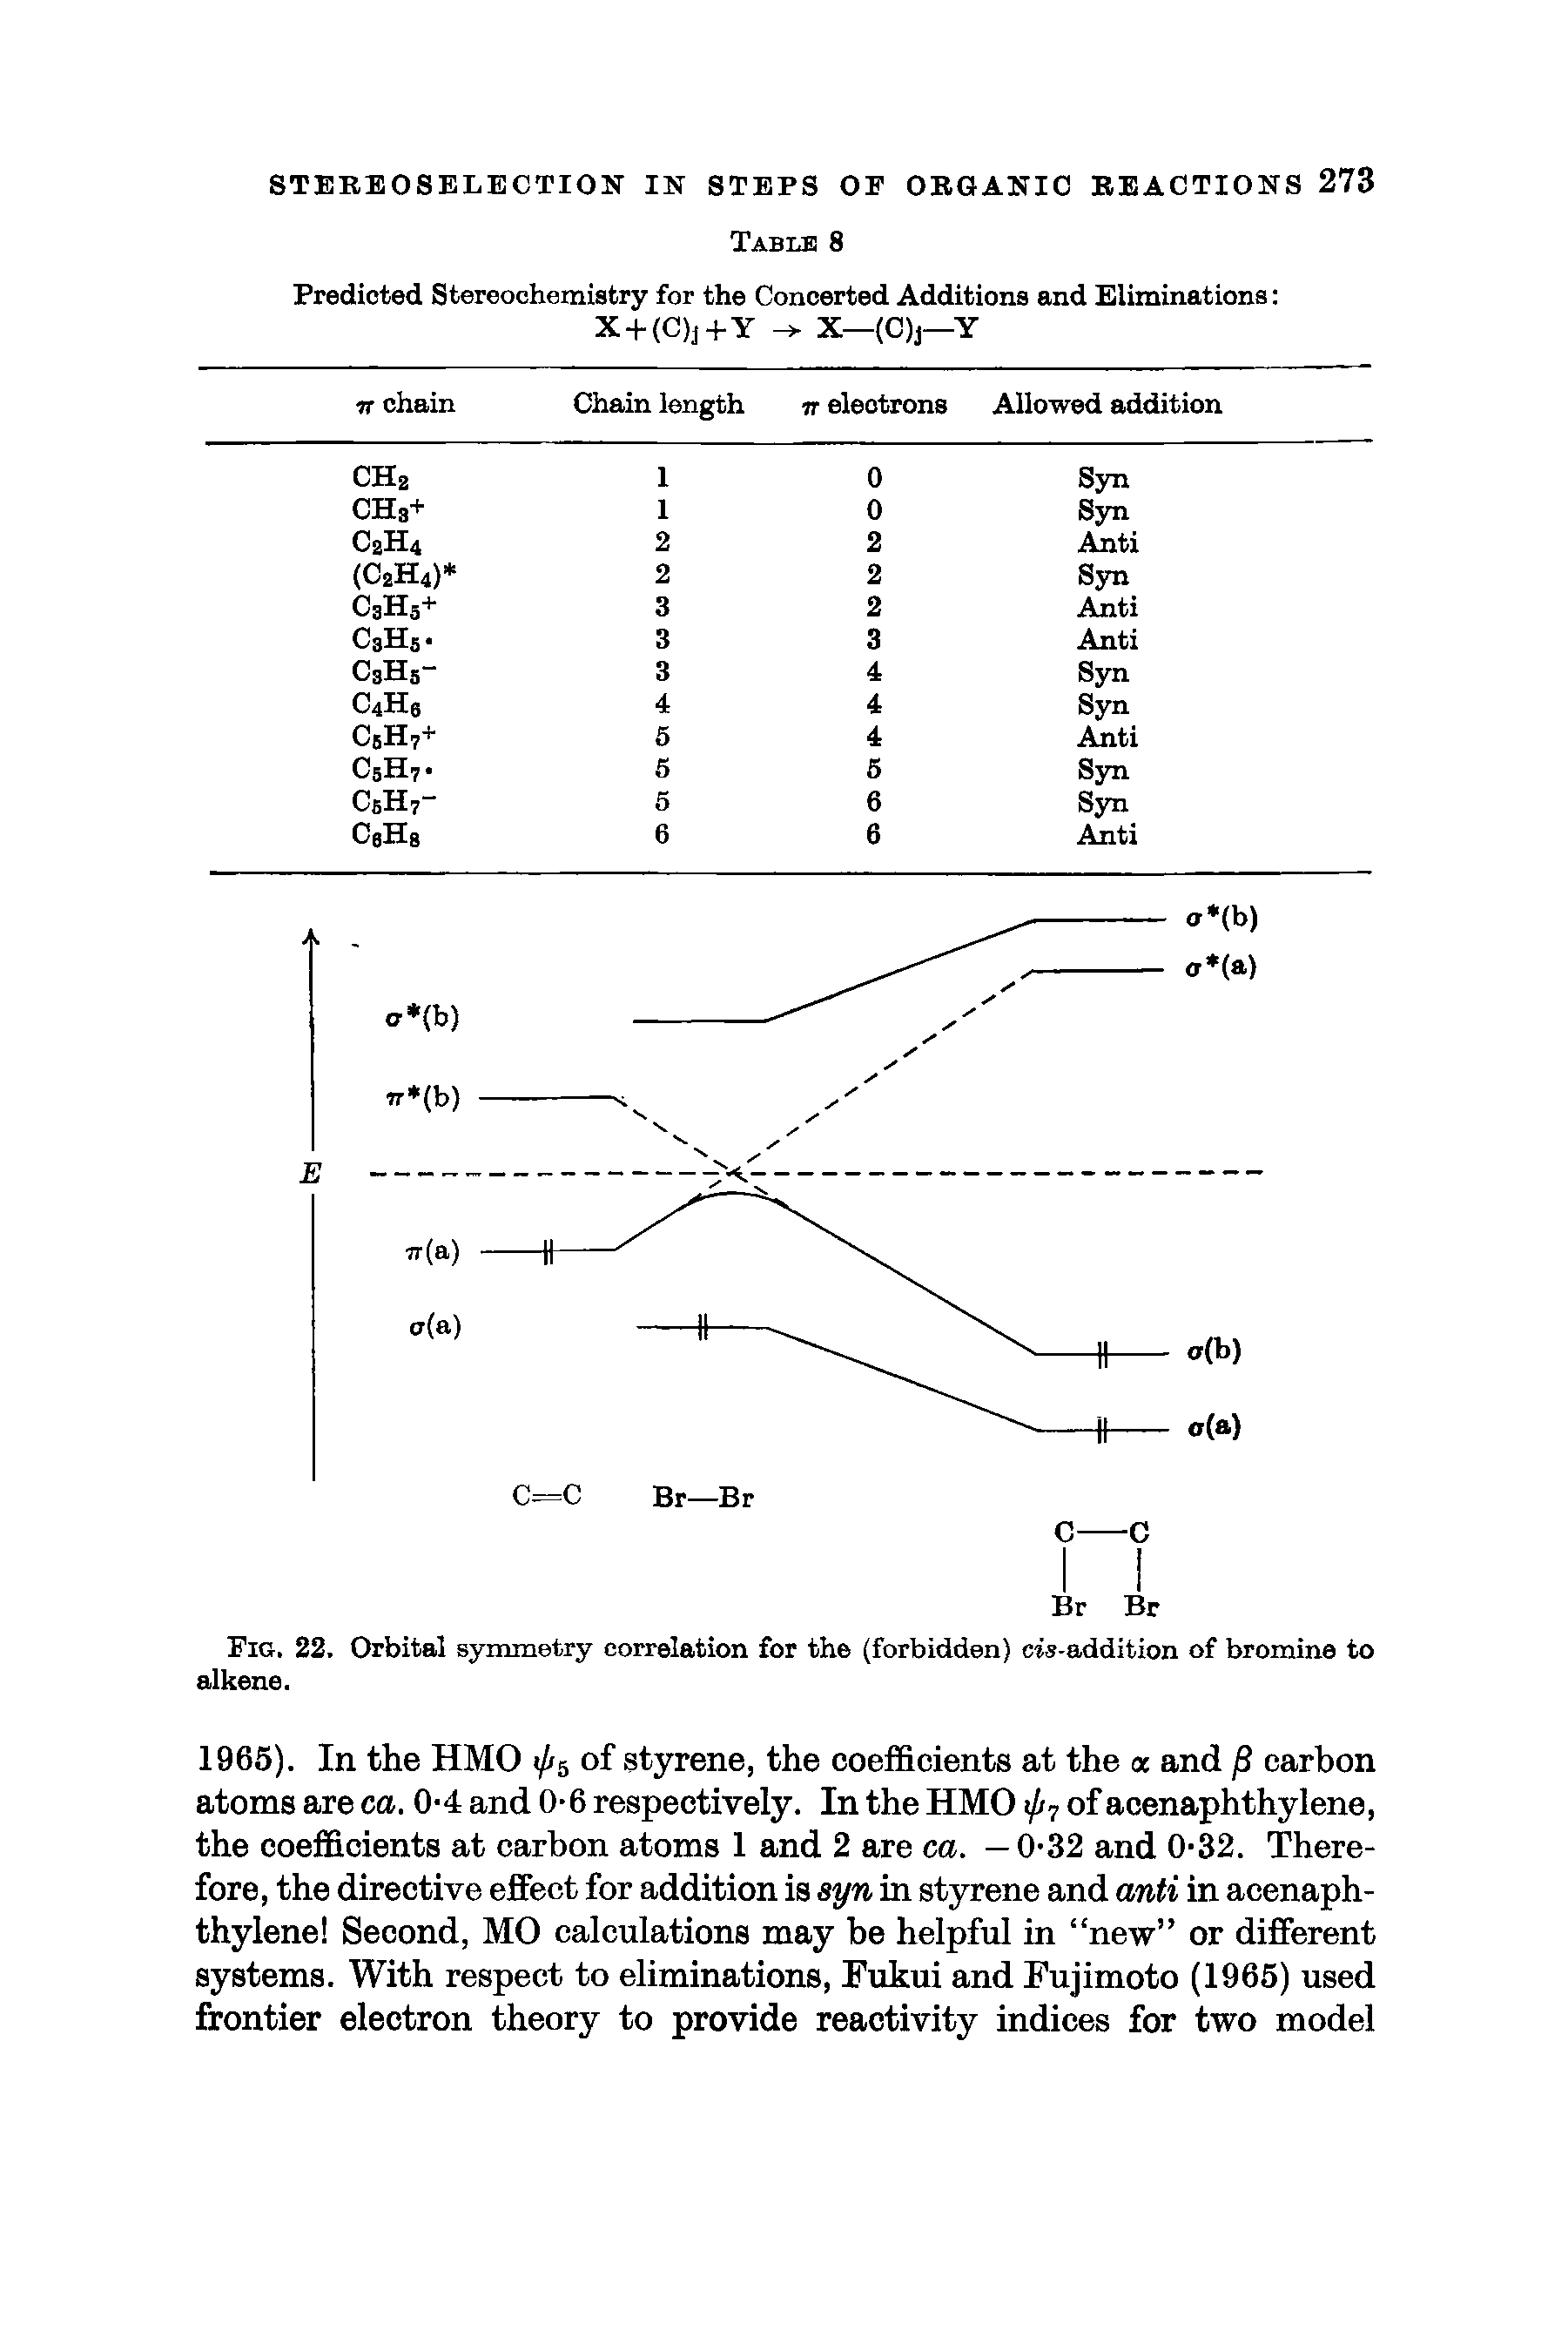 Fig. 22. Orbital symmetry correlation for the (forbidden) cis-addition of bromine to alkene.